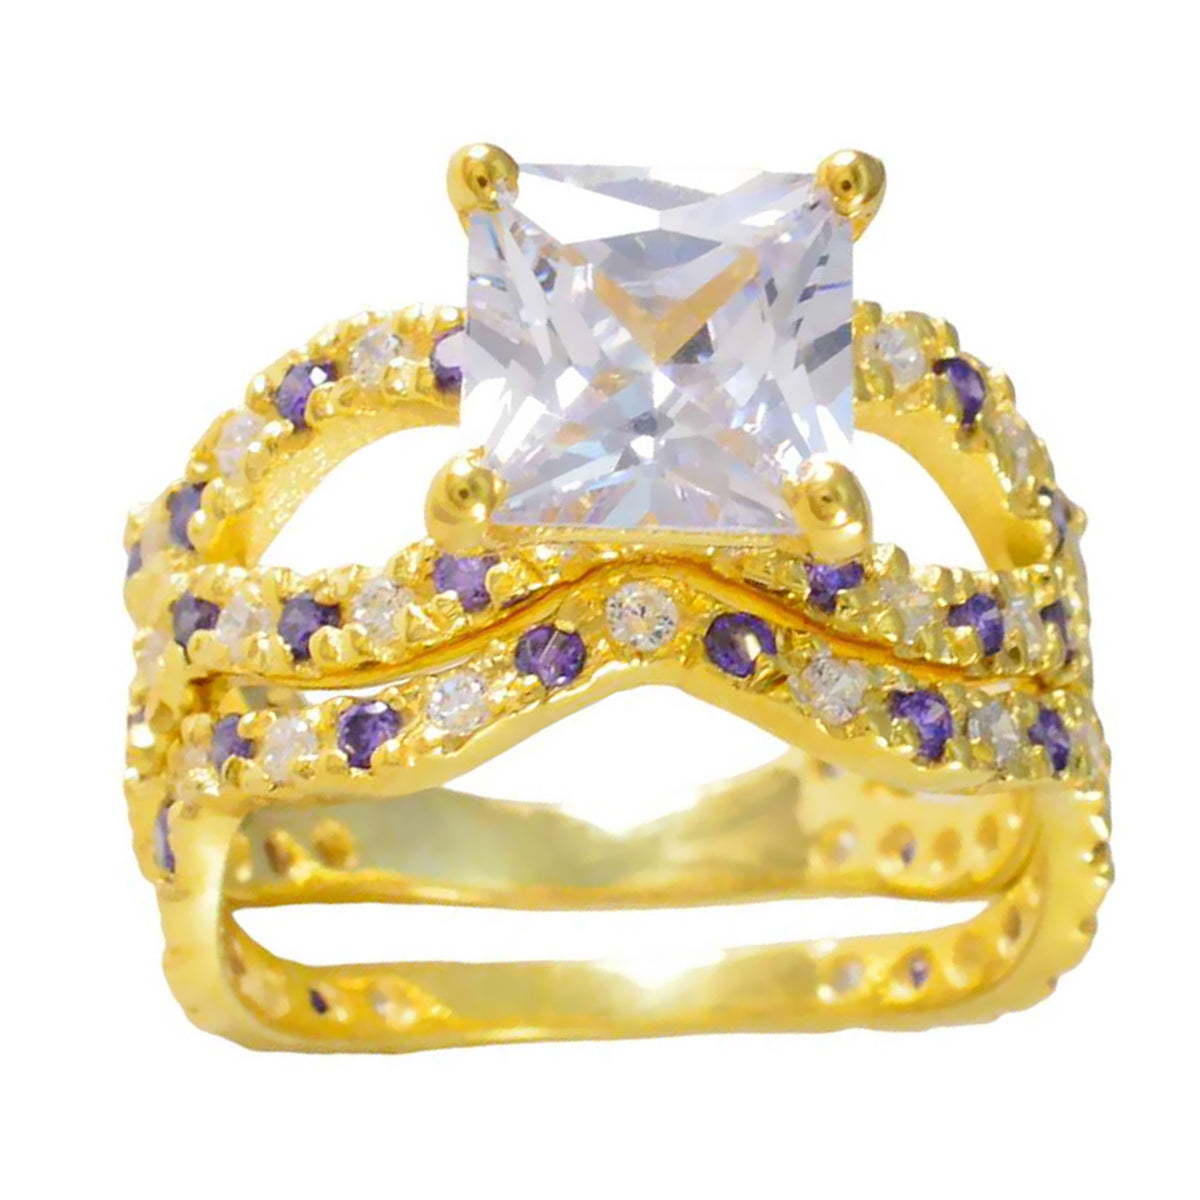 Riyo Charming Silver Ring With Yellow Gold Plating Amethyst Stone Square Shape Prong Setting Handamde Jewelry Engagement Ring